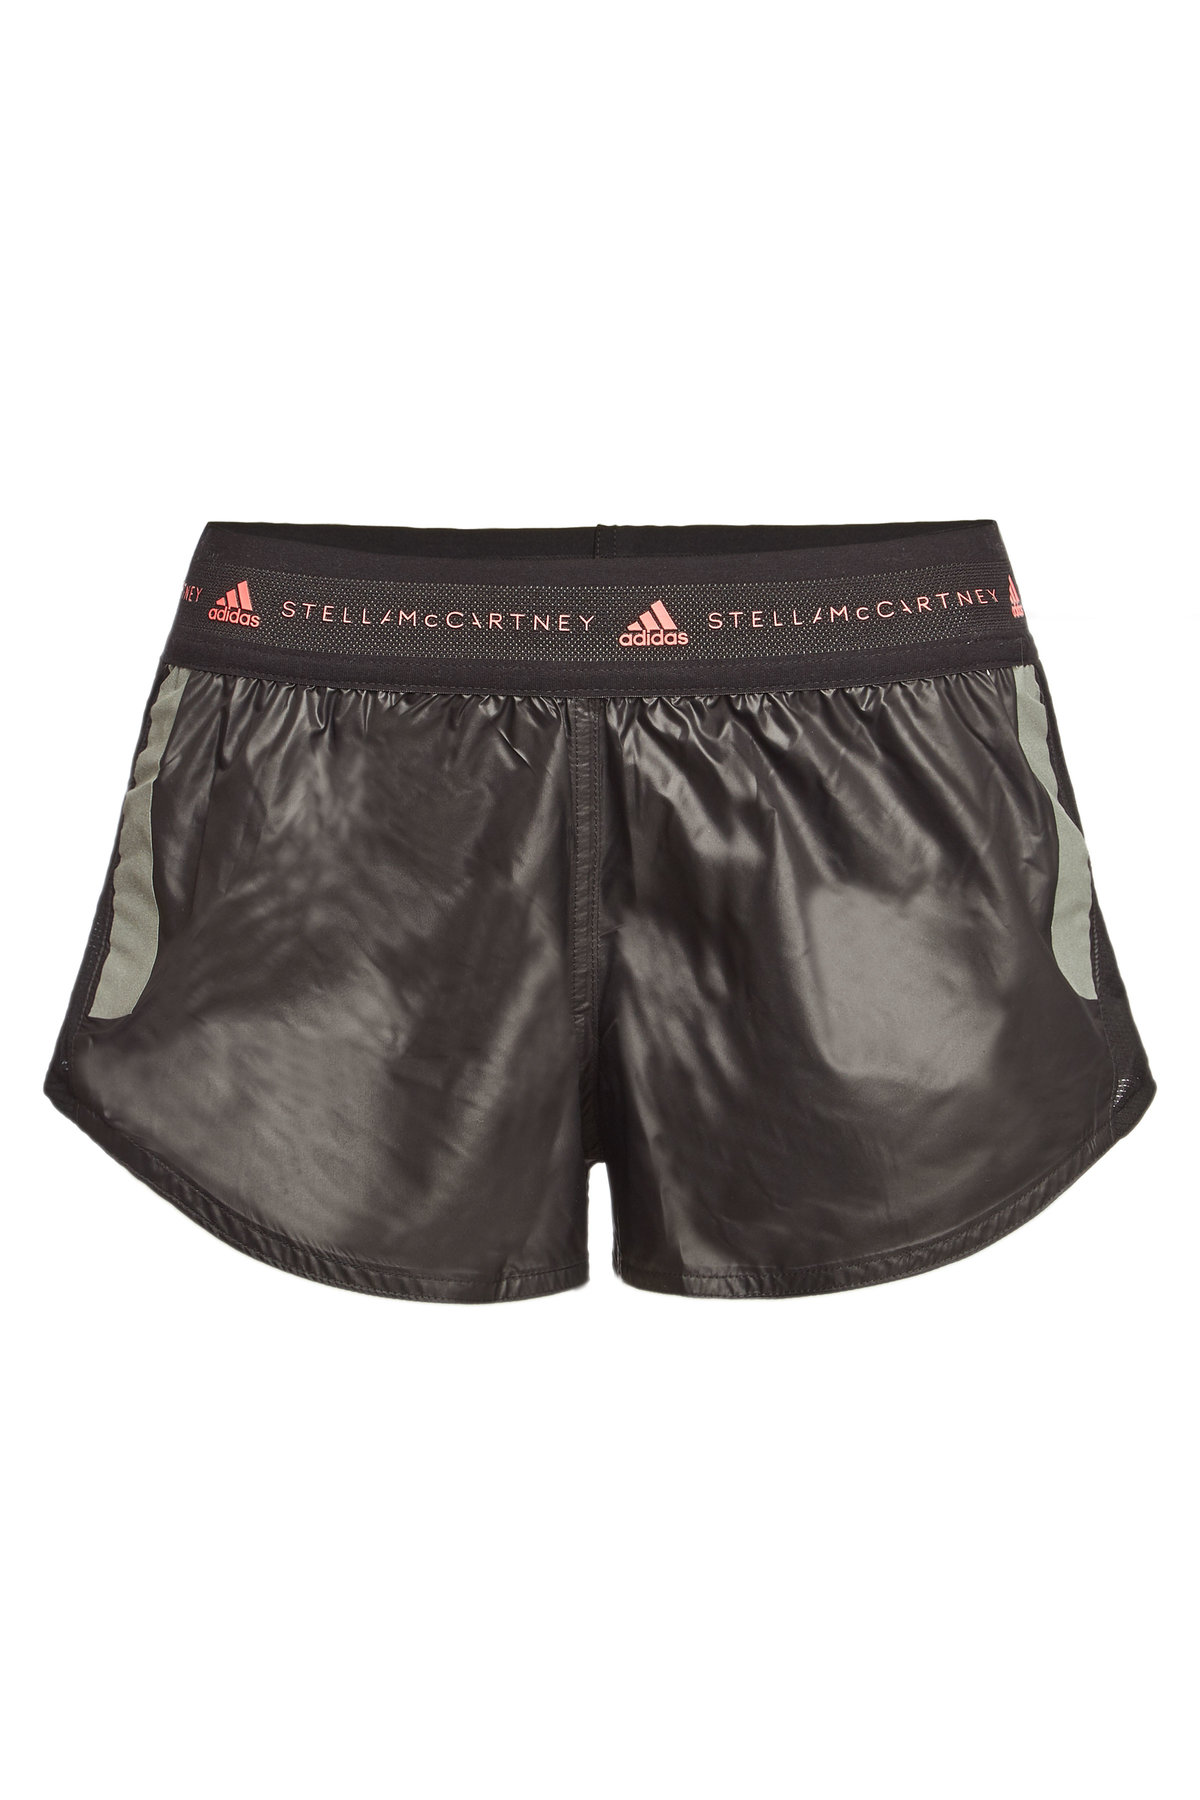 stella mccartney adidas shorts